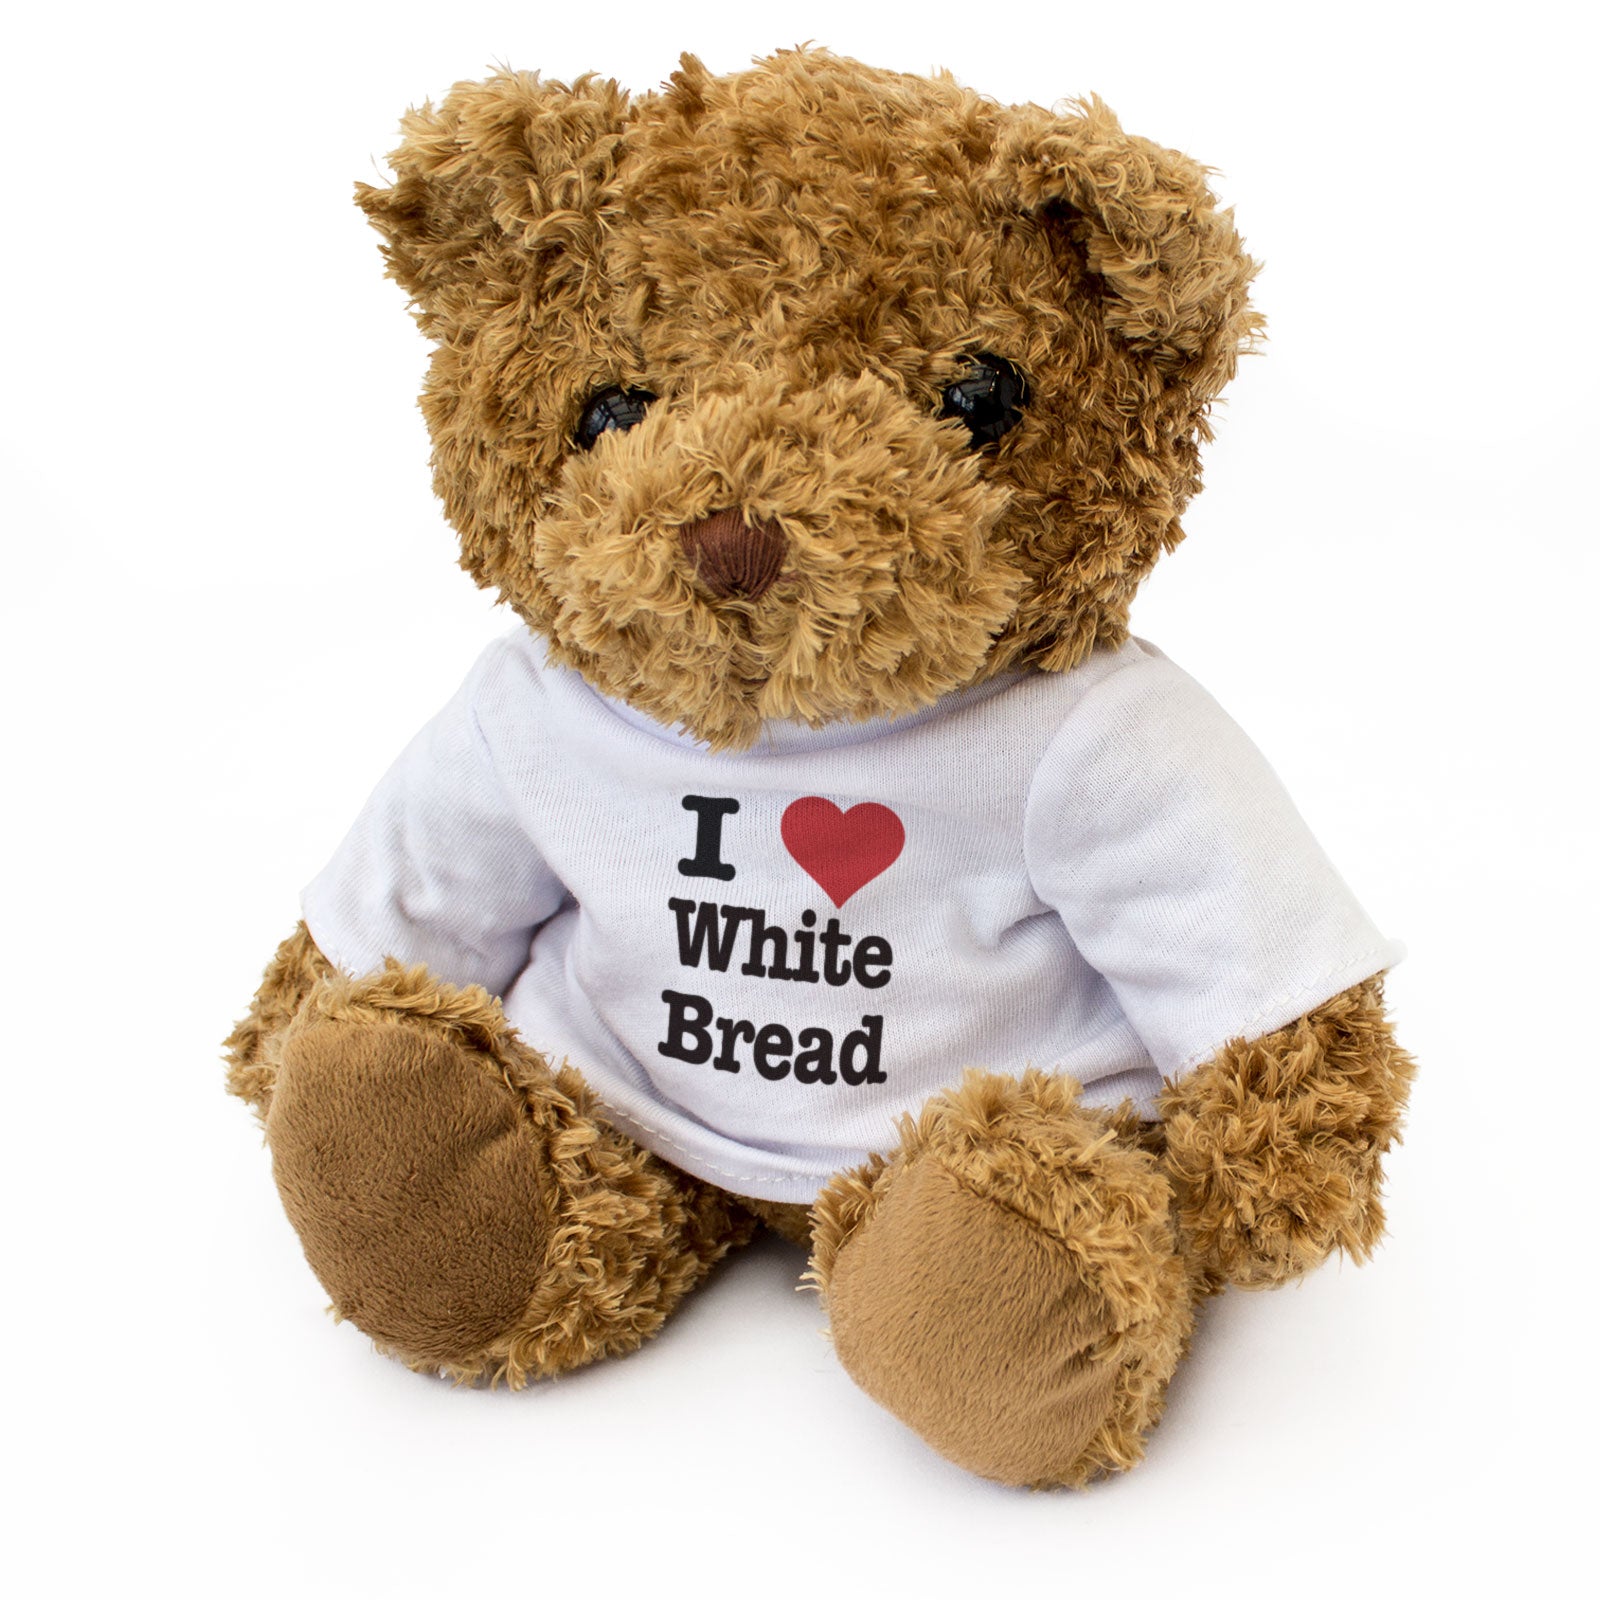 I Love White Bread - Teddy Bear